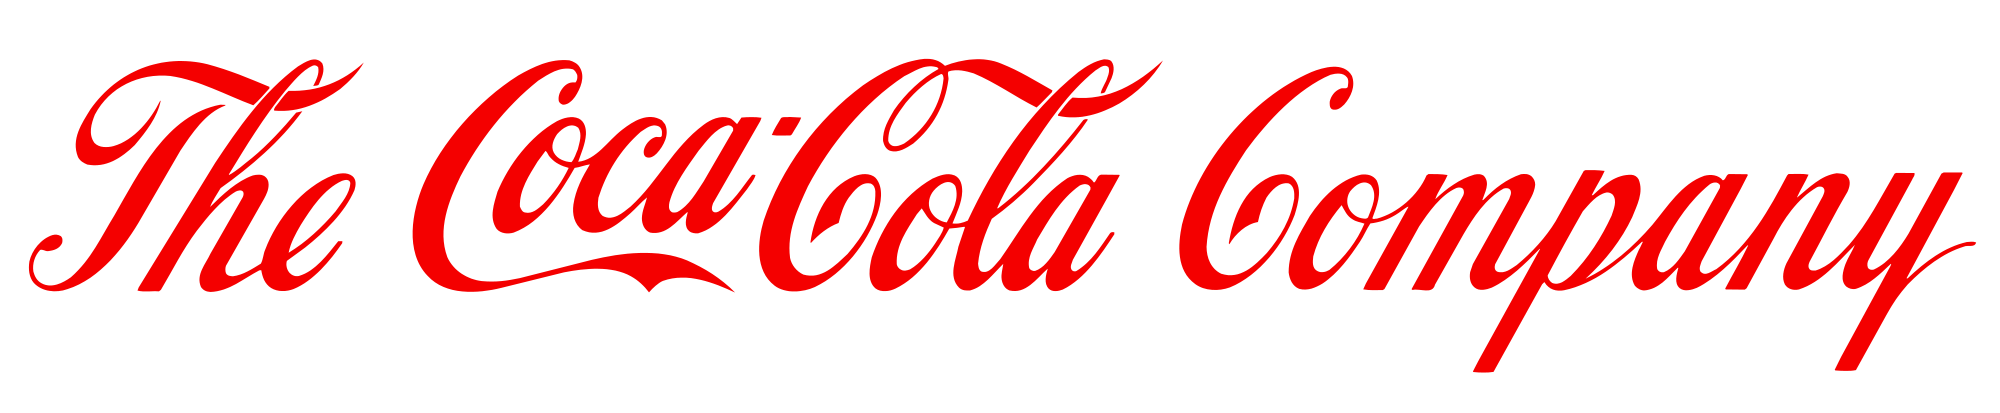 The_Coca-Cola_Company_logo.svg